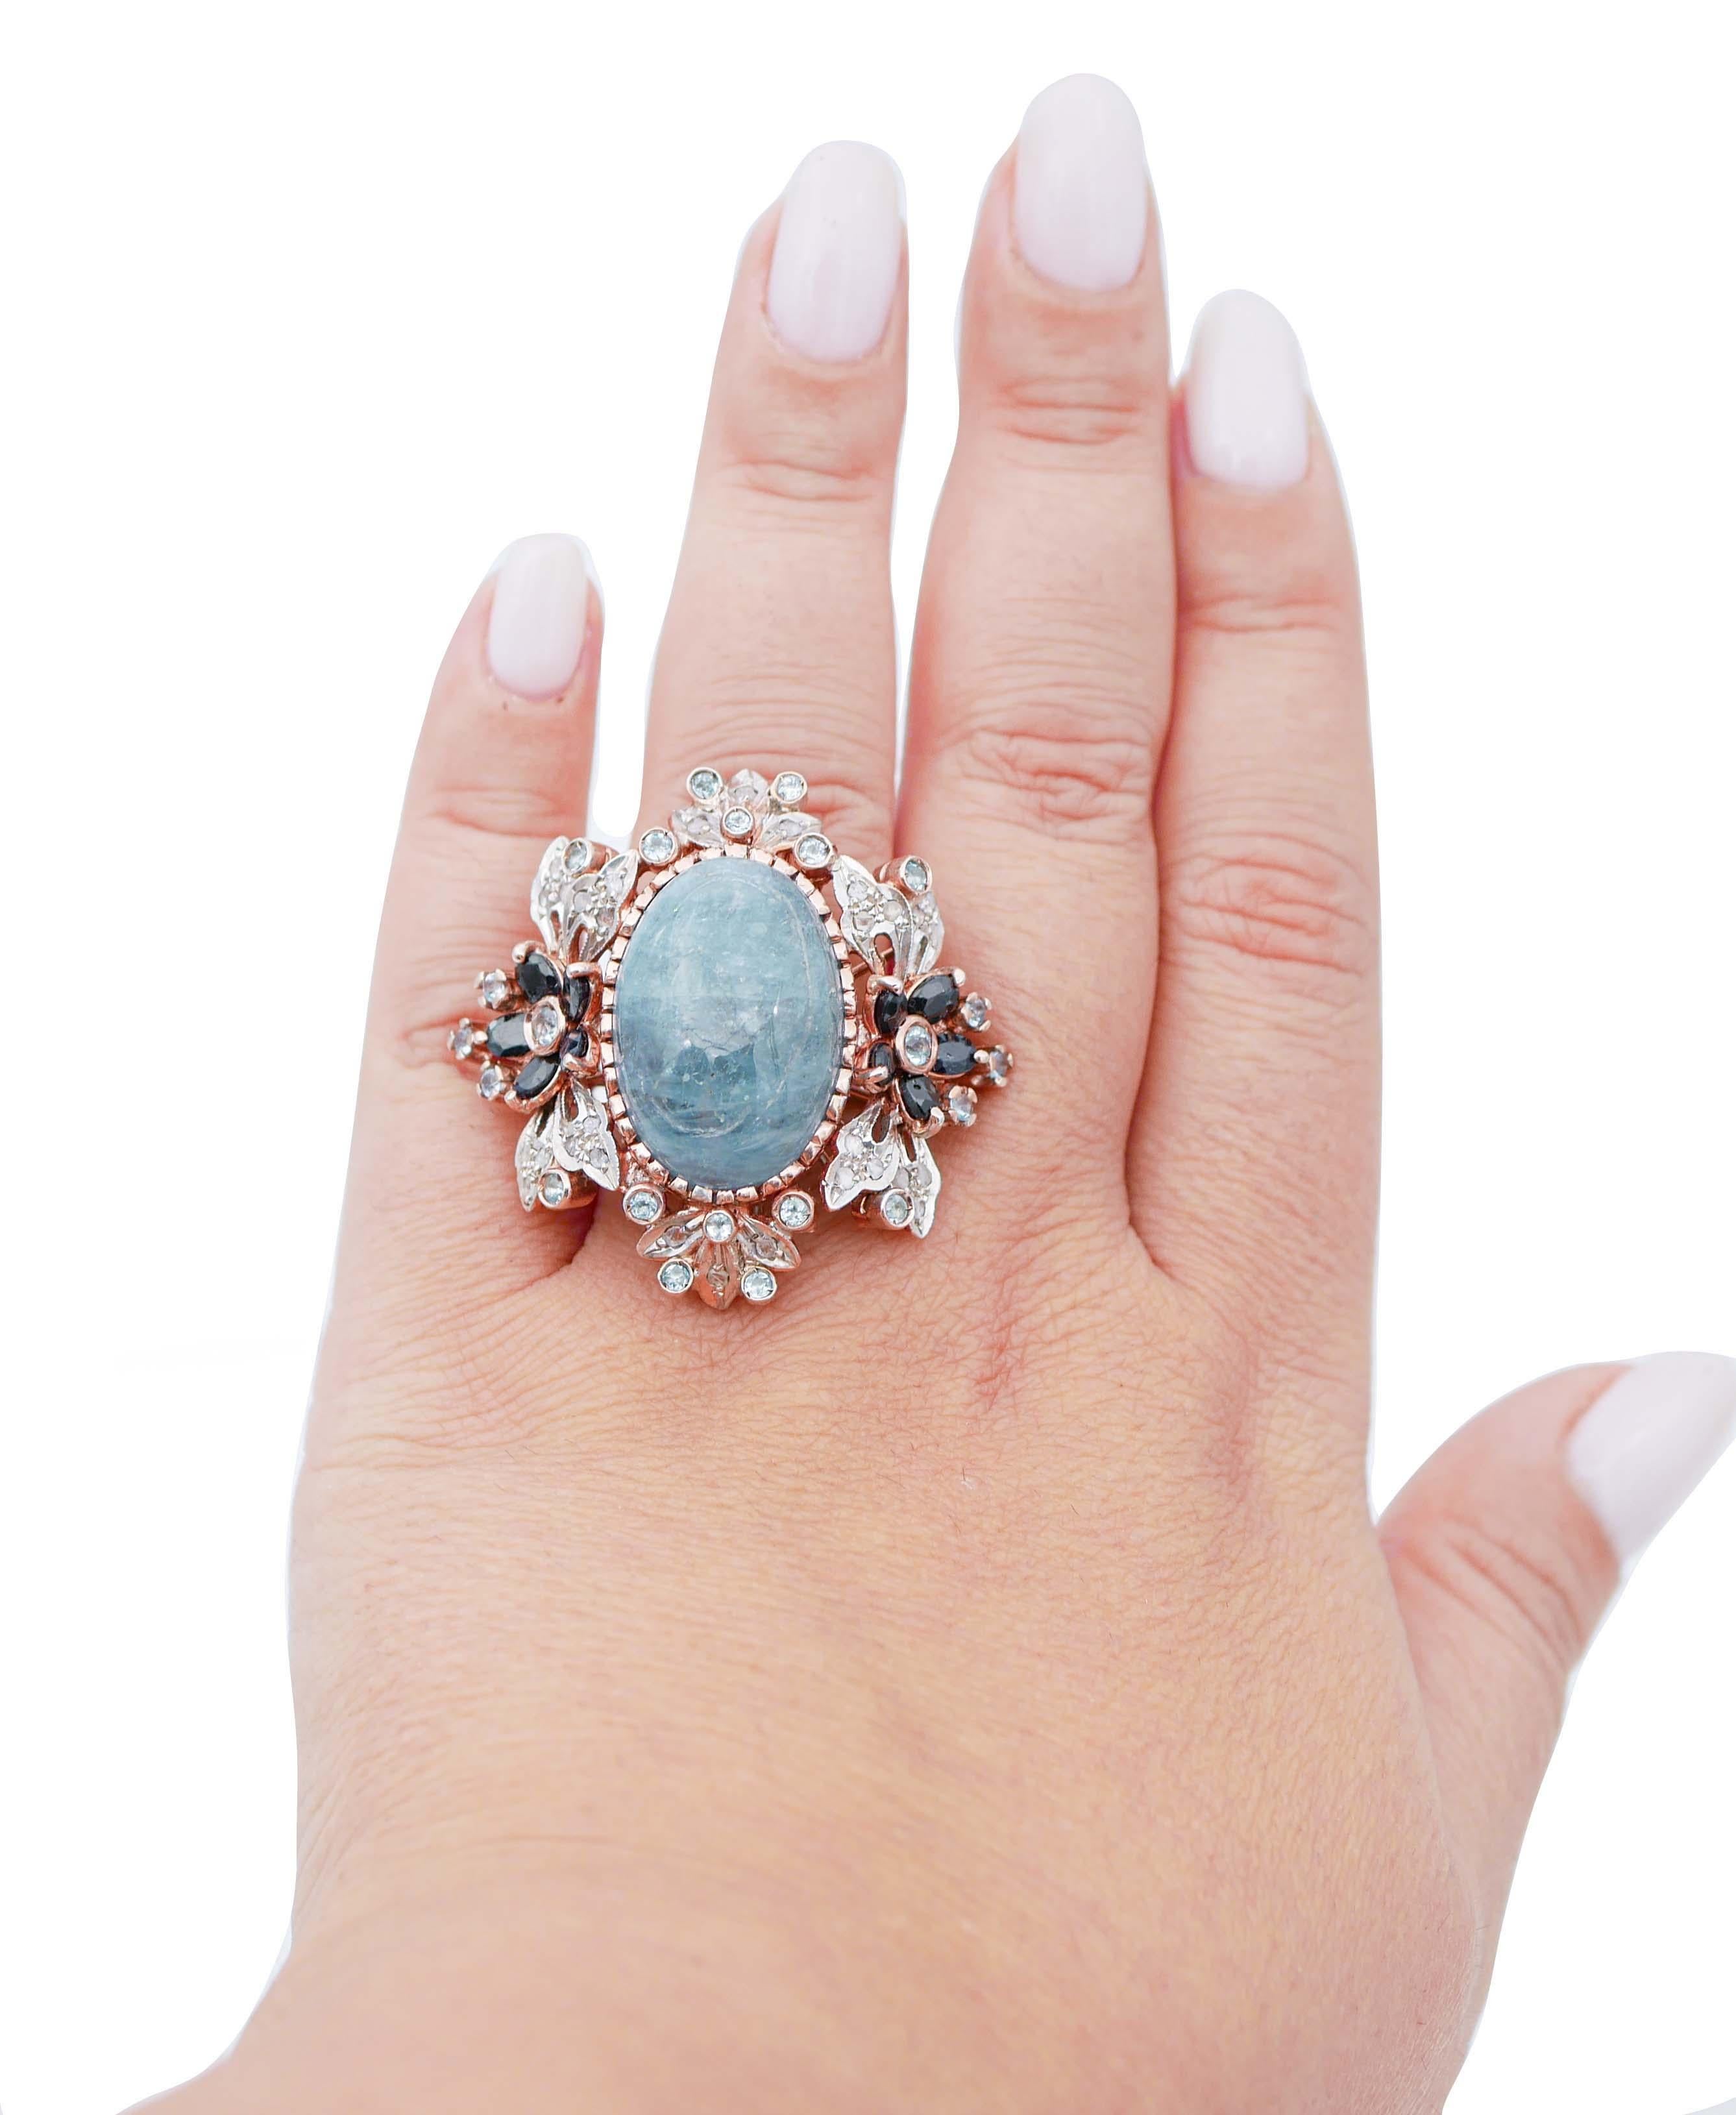 Mixed Cut Aquamarine, Sapphires Diamonds, 14 Karat Rose Gold and Silver Ring